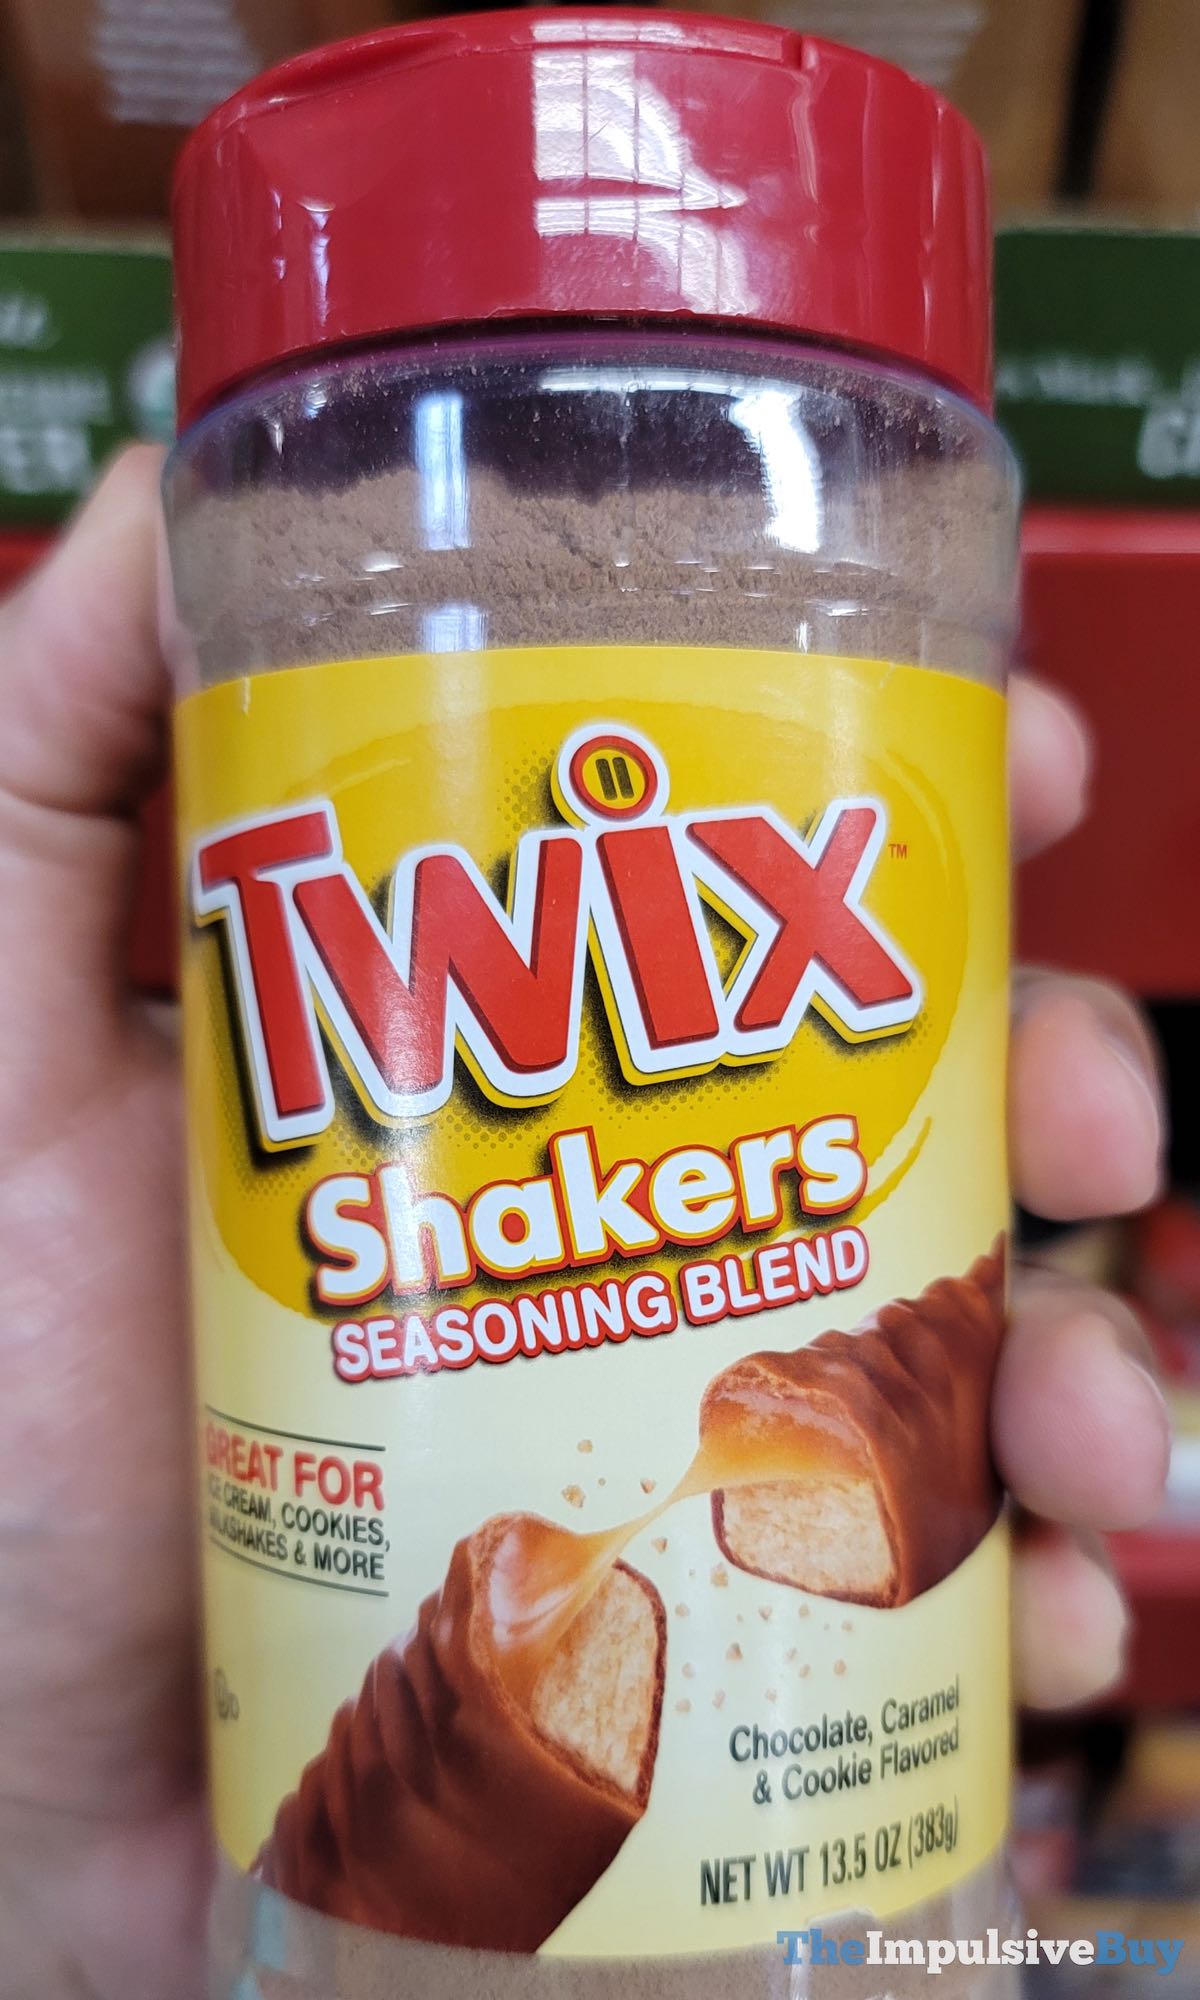 SPOTTED: Twix Shakers Seasoning Blend - The Impulsive Buy